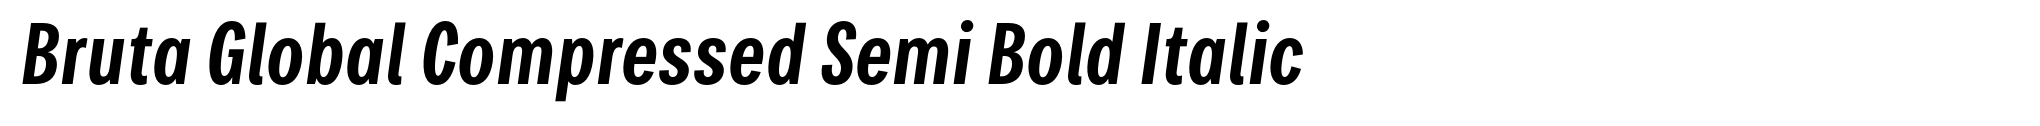 Bruta Global Compressed Semi Bold Italic image